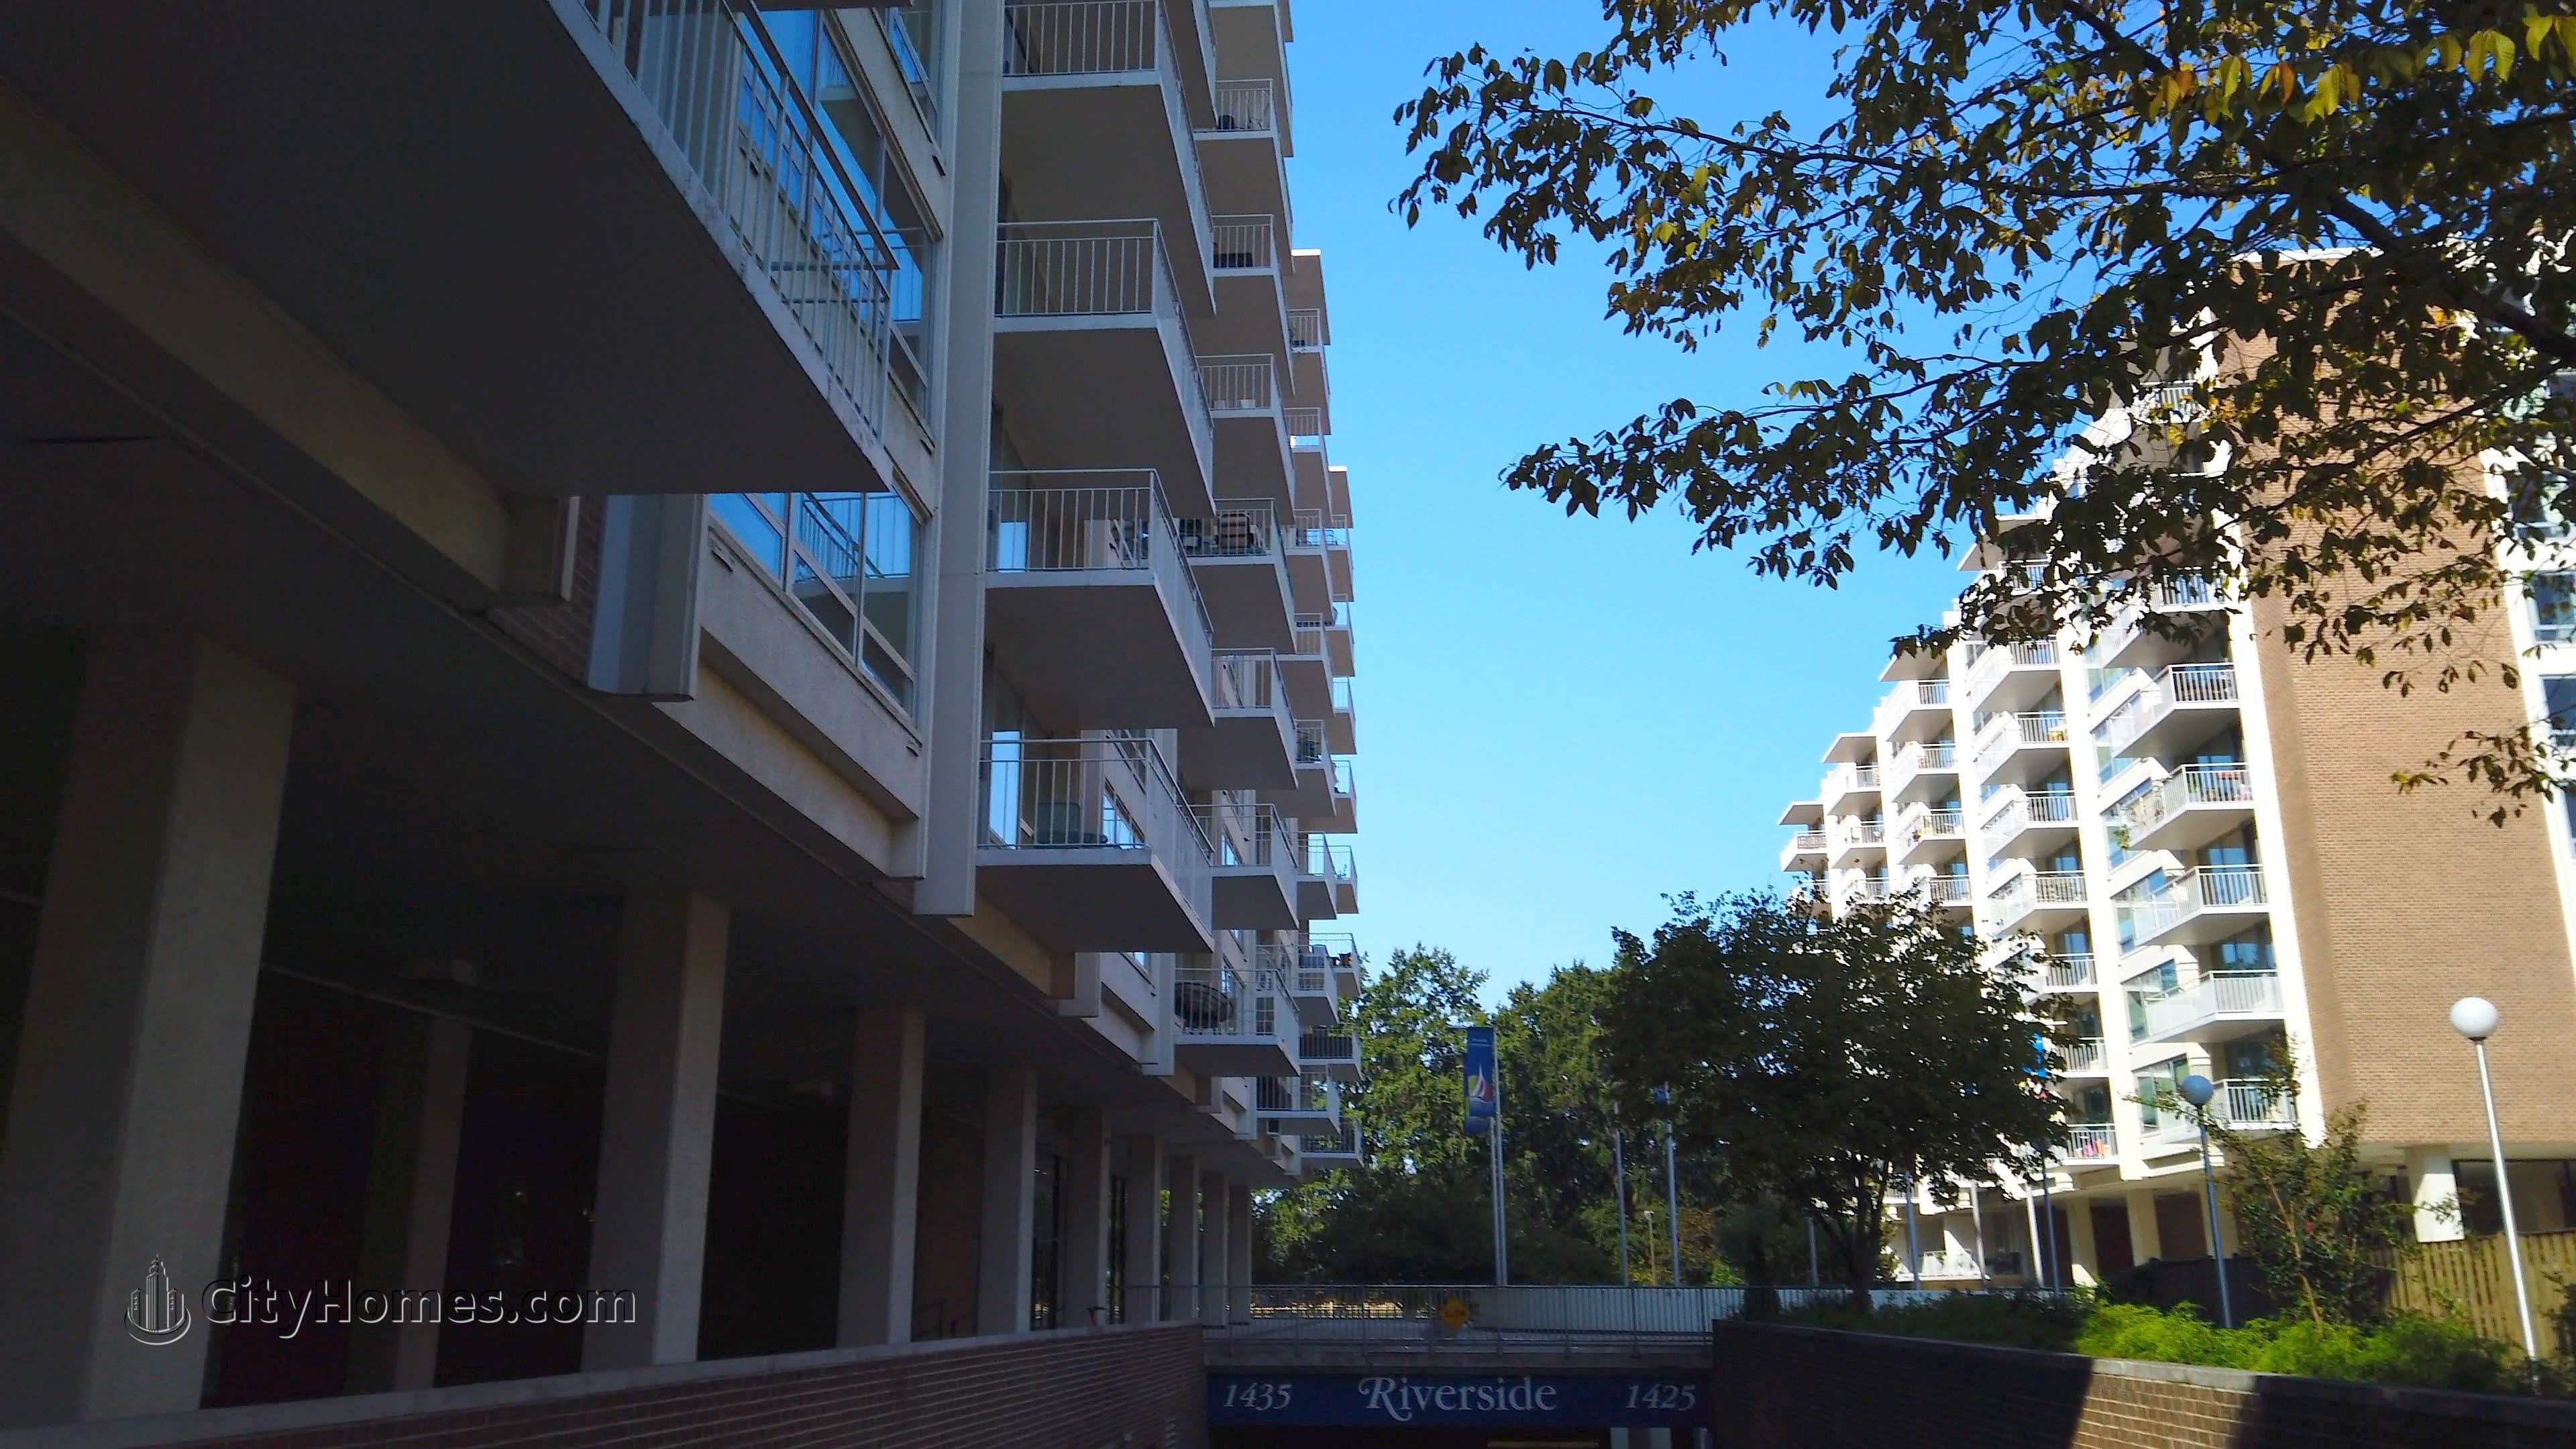 8. Riverside Condominiums edificio a 1425 & 1435 4th St NW, Southwest / Waterfront, Washington, DC 20024